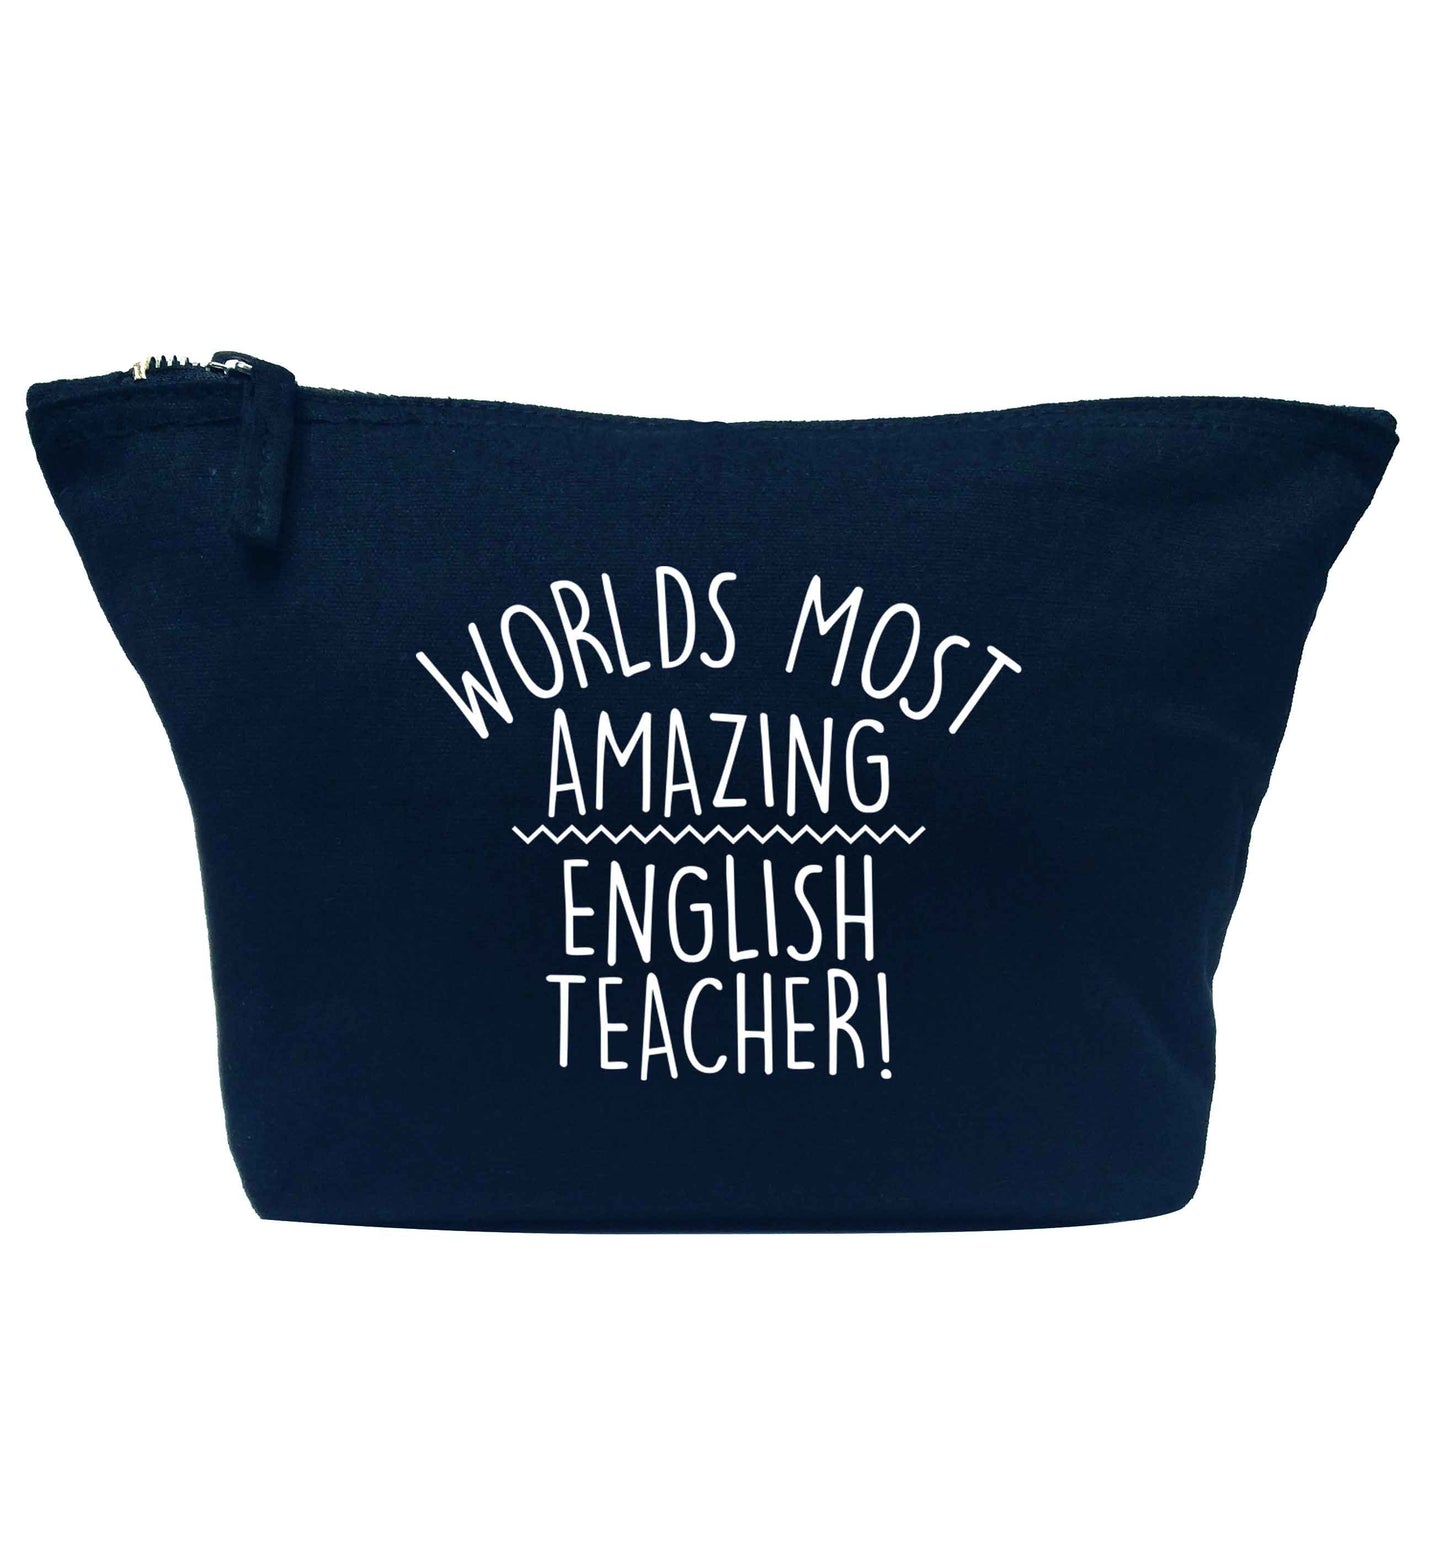 Worlds most amazing English teacher navy makeup bag